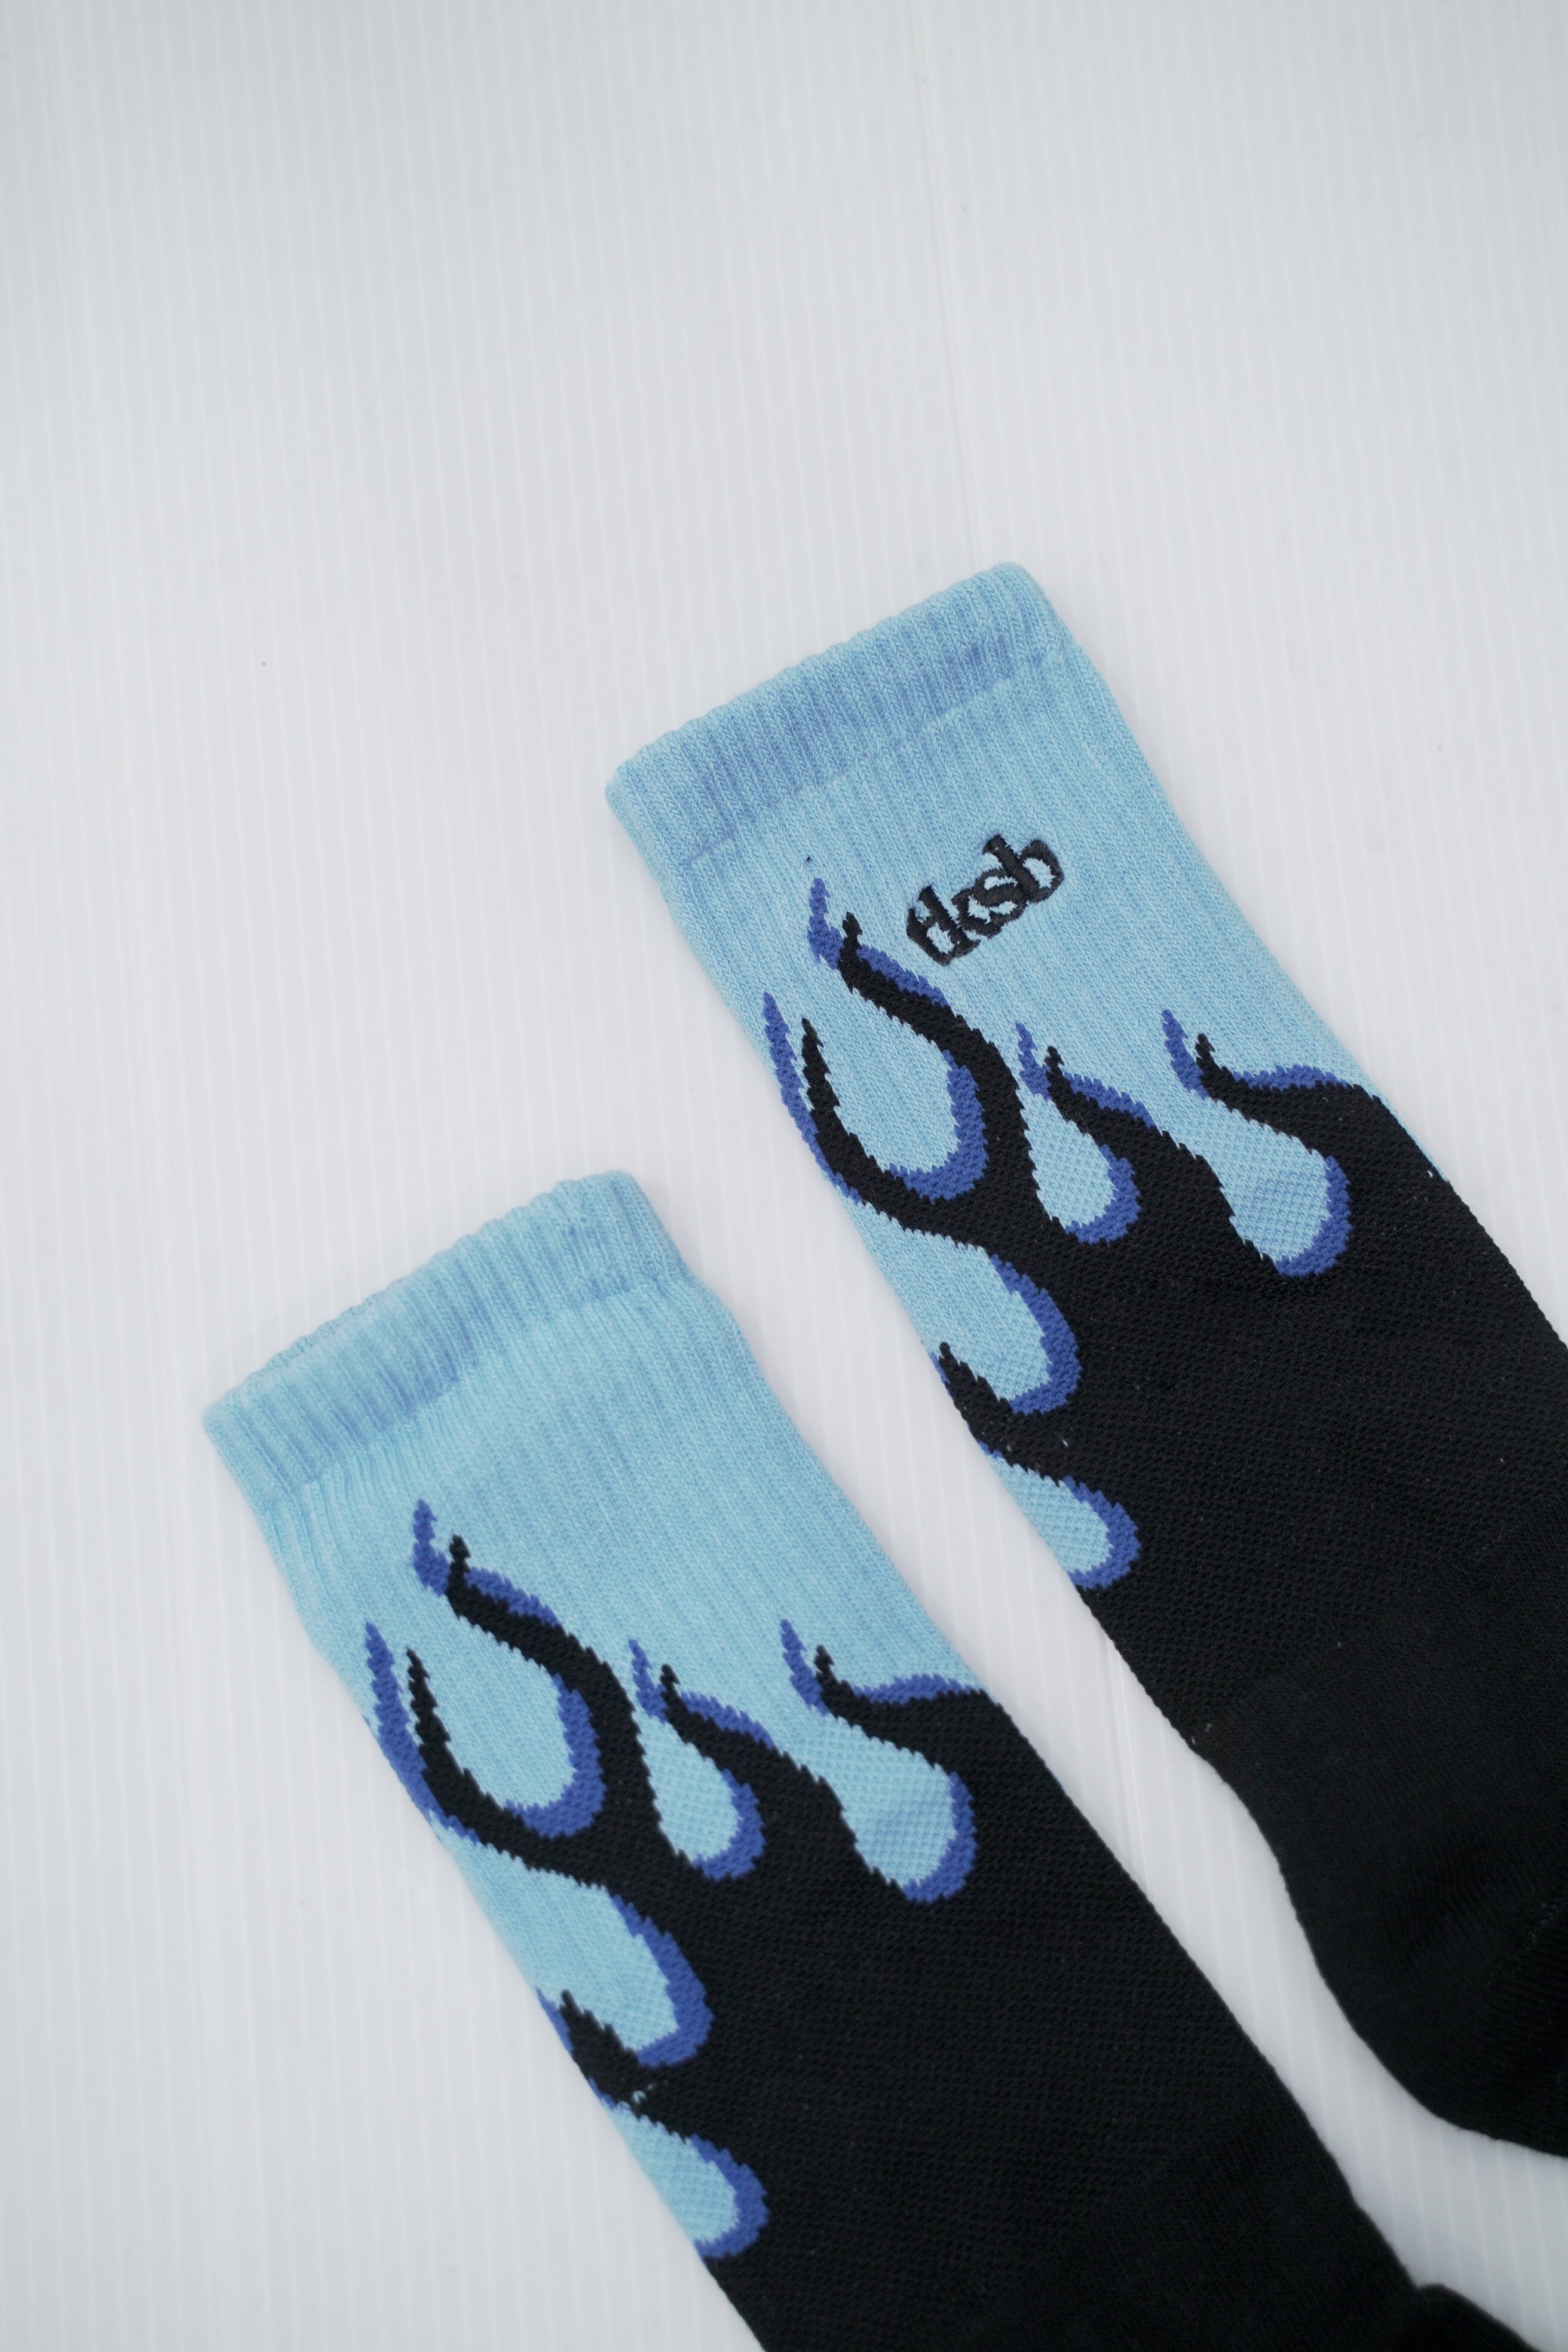 TKSB - Blue Flame Socks